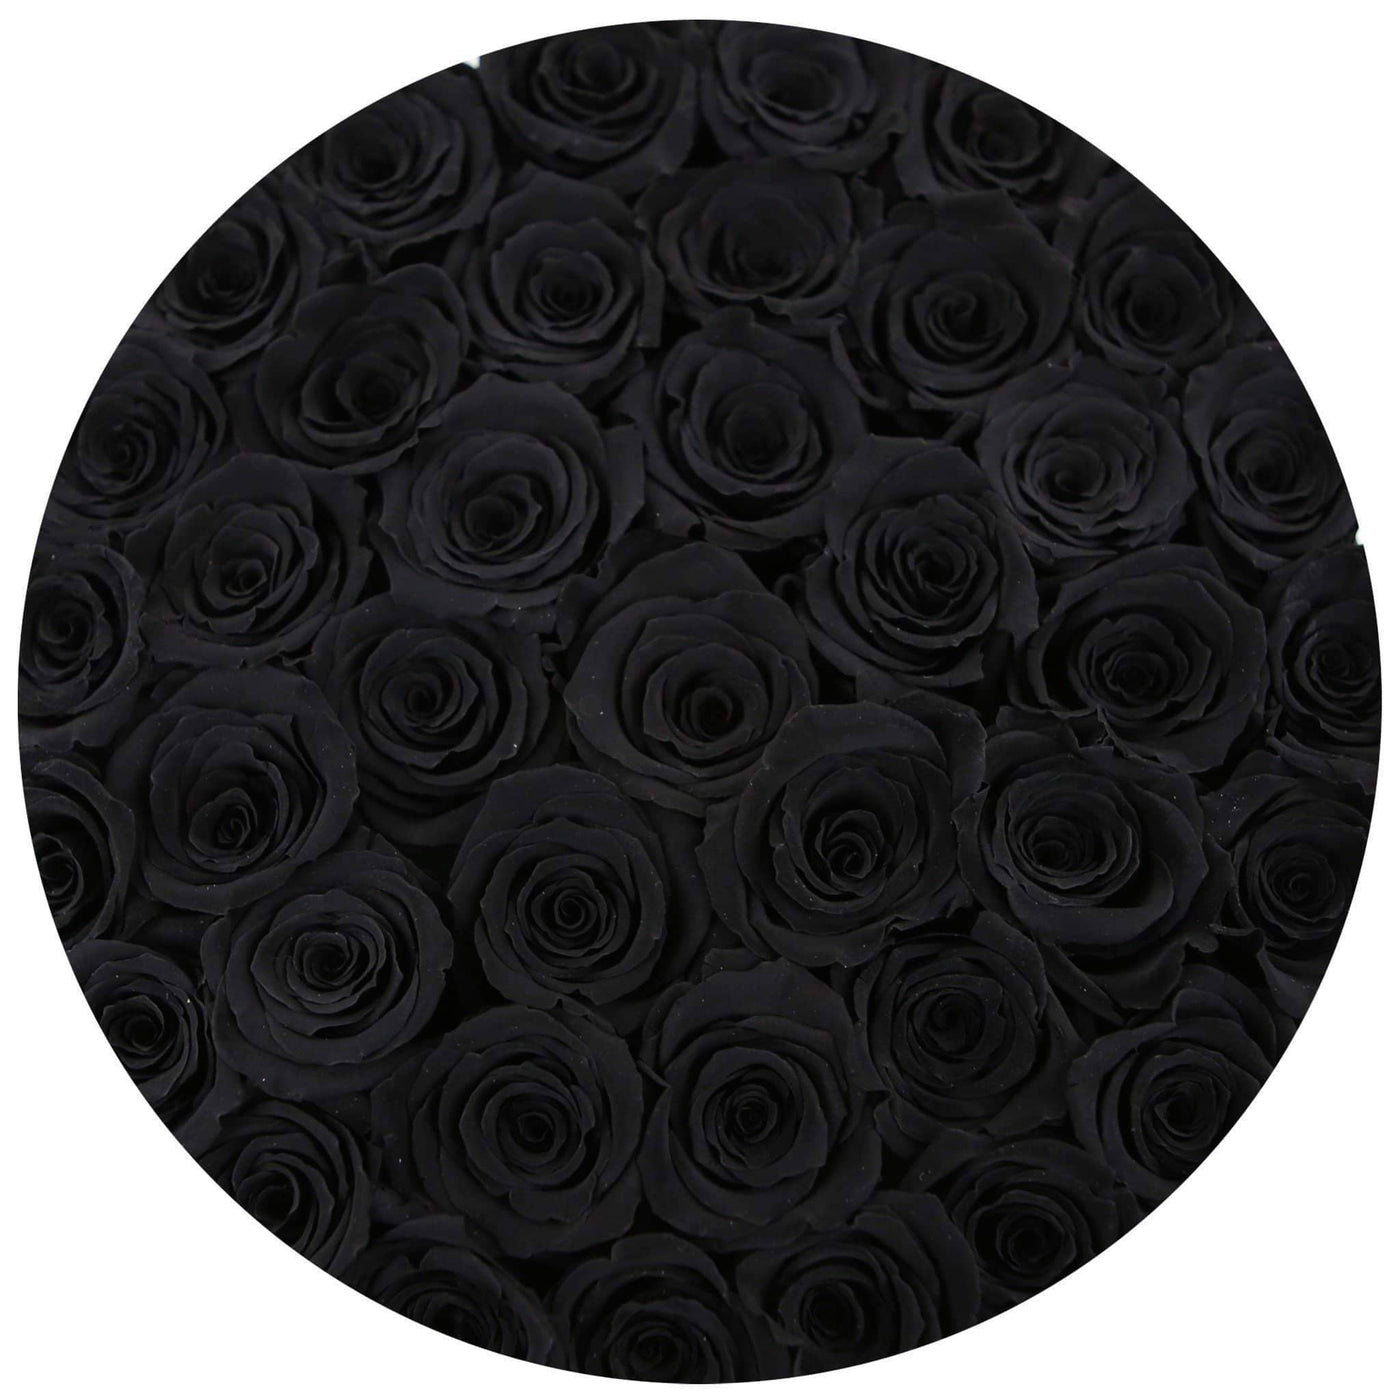 Black Roses That Last A Year - Grande Rose Box